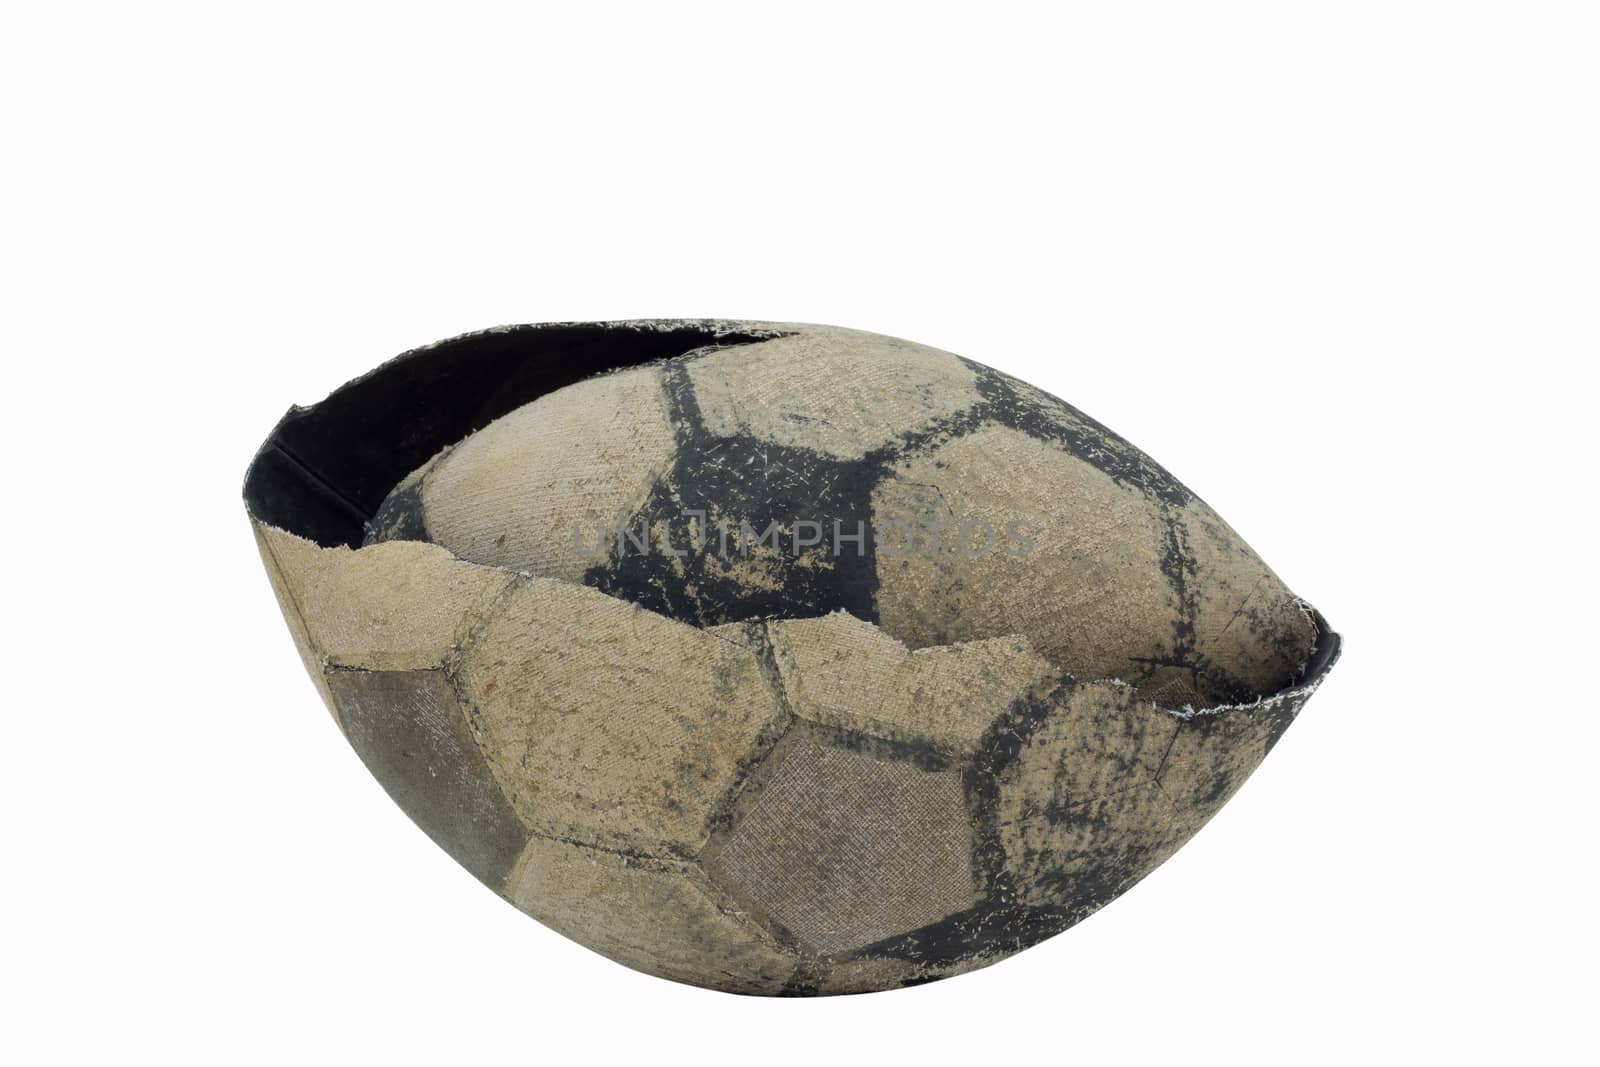 The oldbroken soccer ball isolated on white background